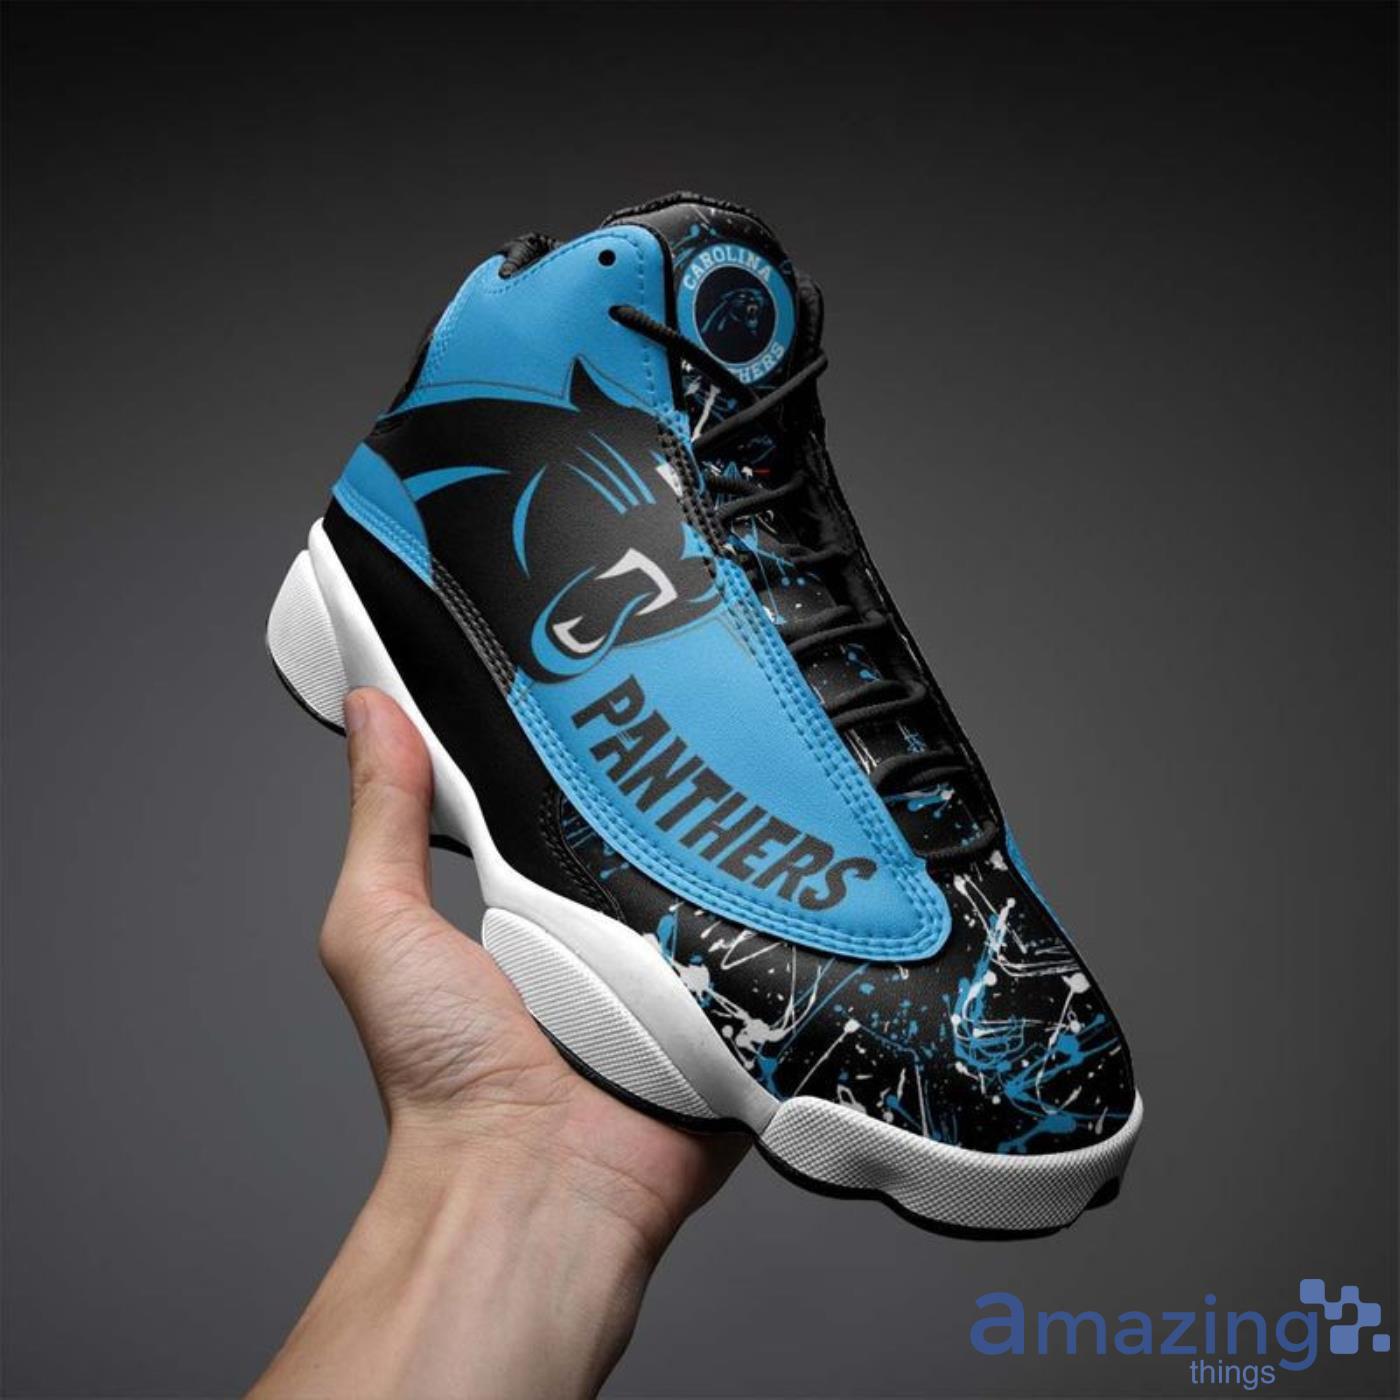 Carolina Panthers Limited Edition Air Jordan 13 Sneakers Shoes